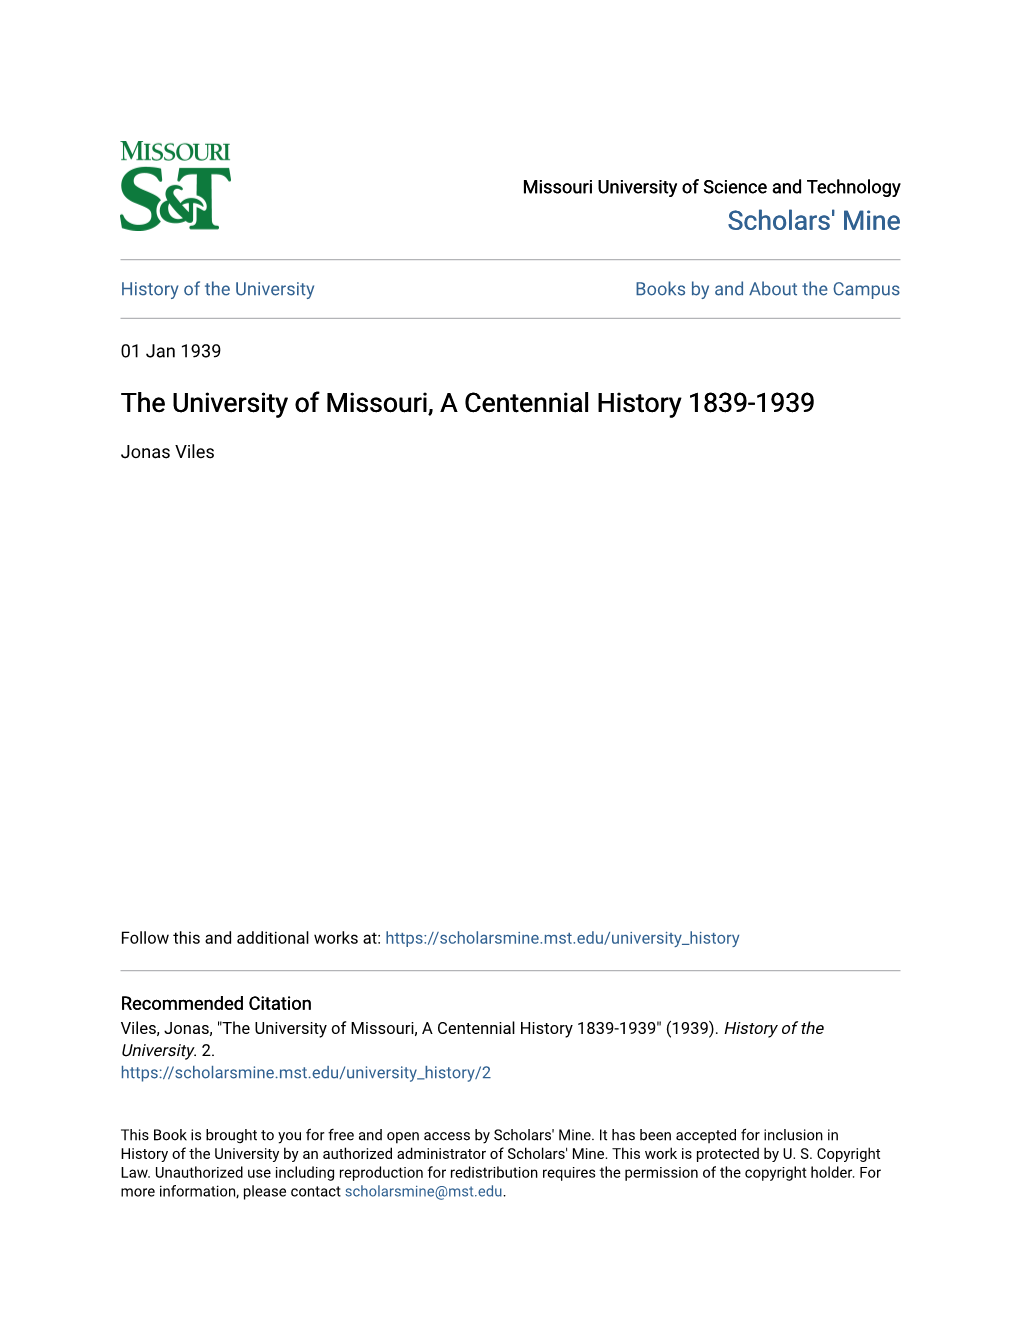 The University of Missouri, a Centennial History 1839-1939